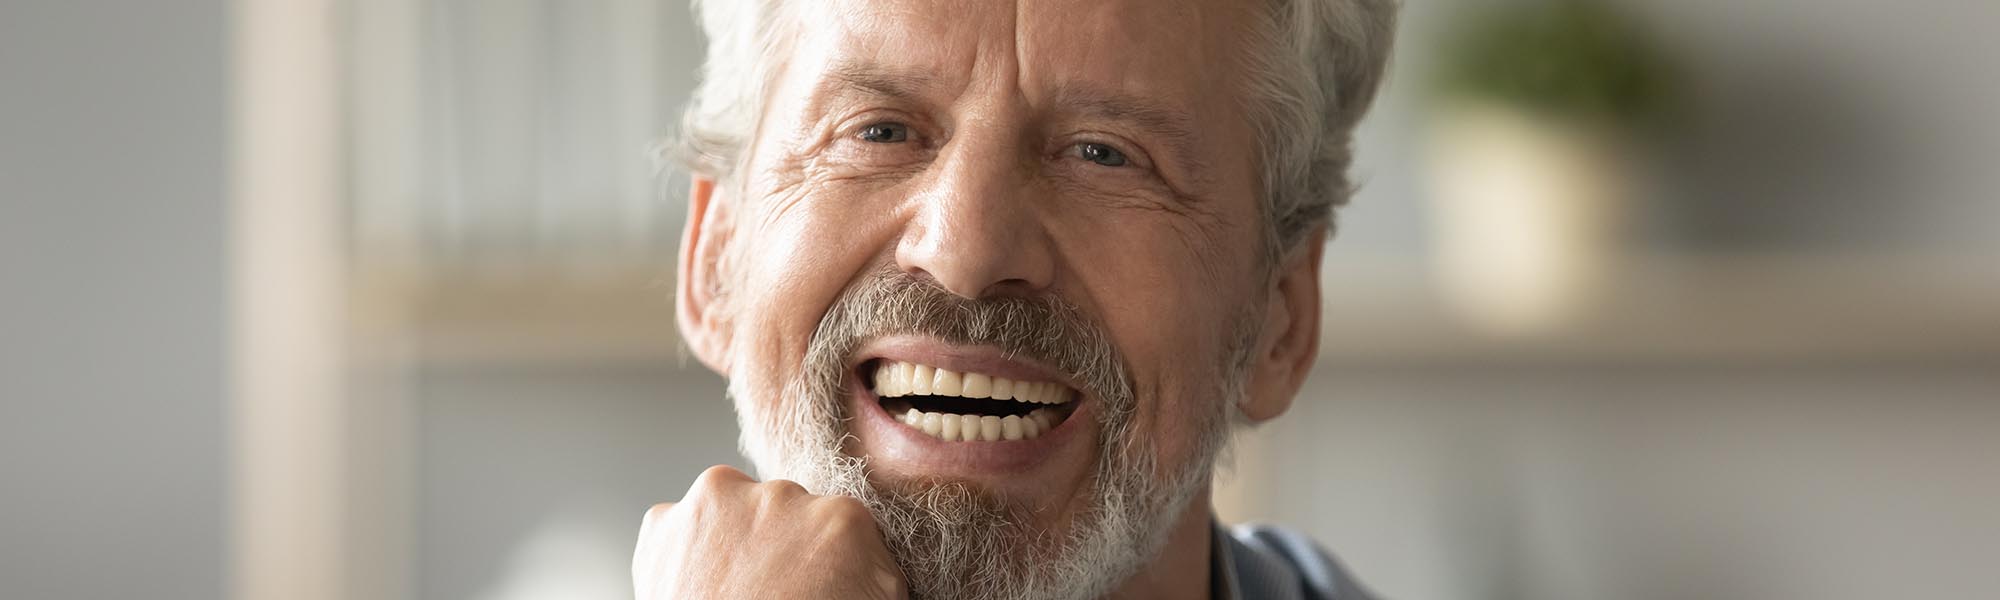 Dentures Benefits in Carson CA